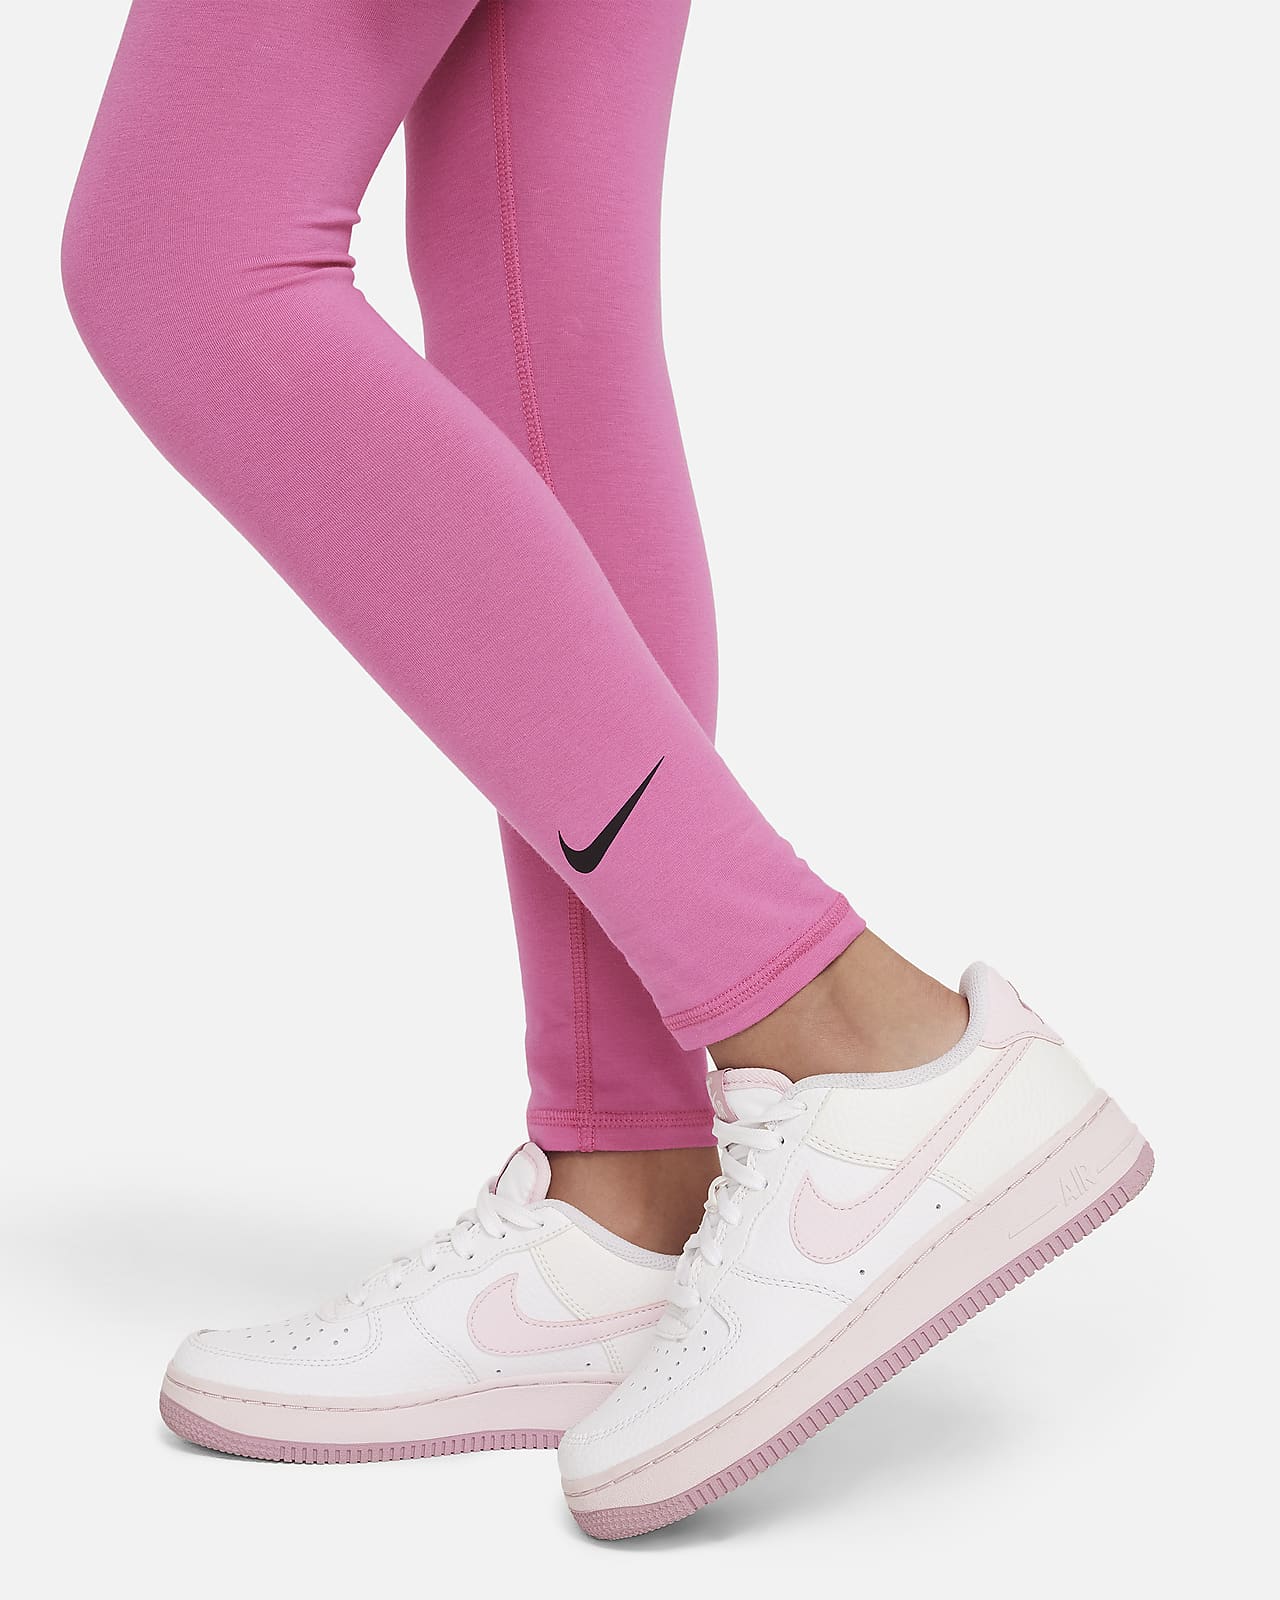 Nike Sportswear Favourites Older Kids' (Girls') High-Waisted